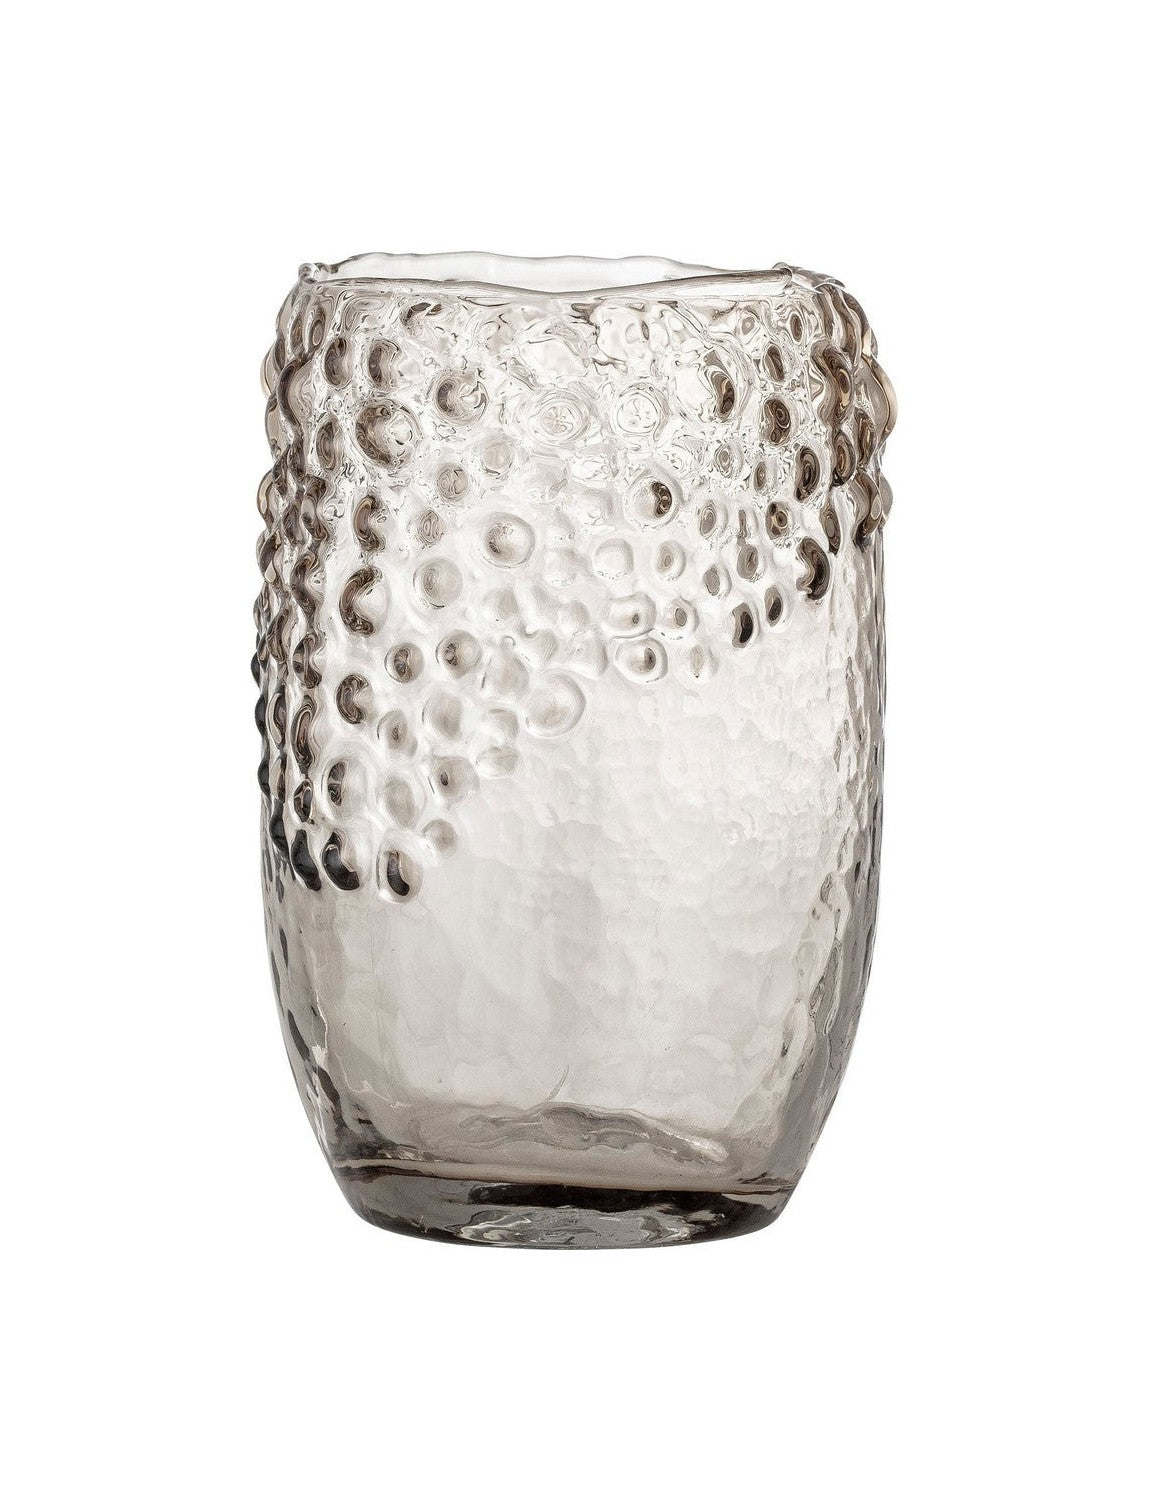 Bloomingville Emalia Vase, Brown, Glass